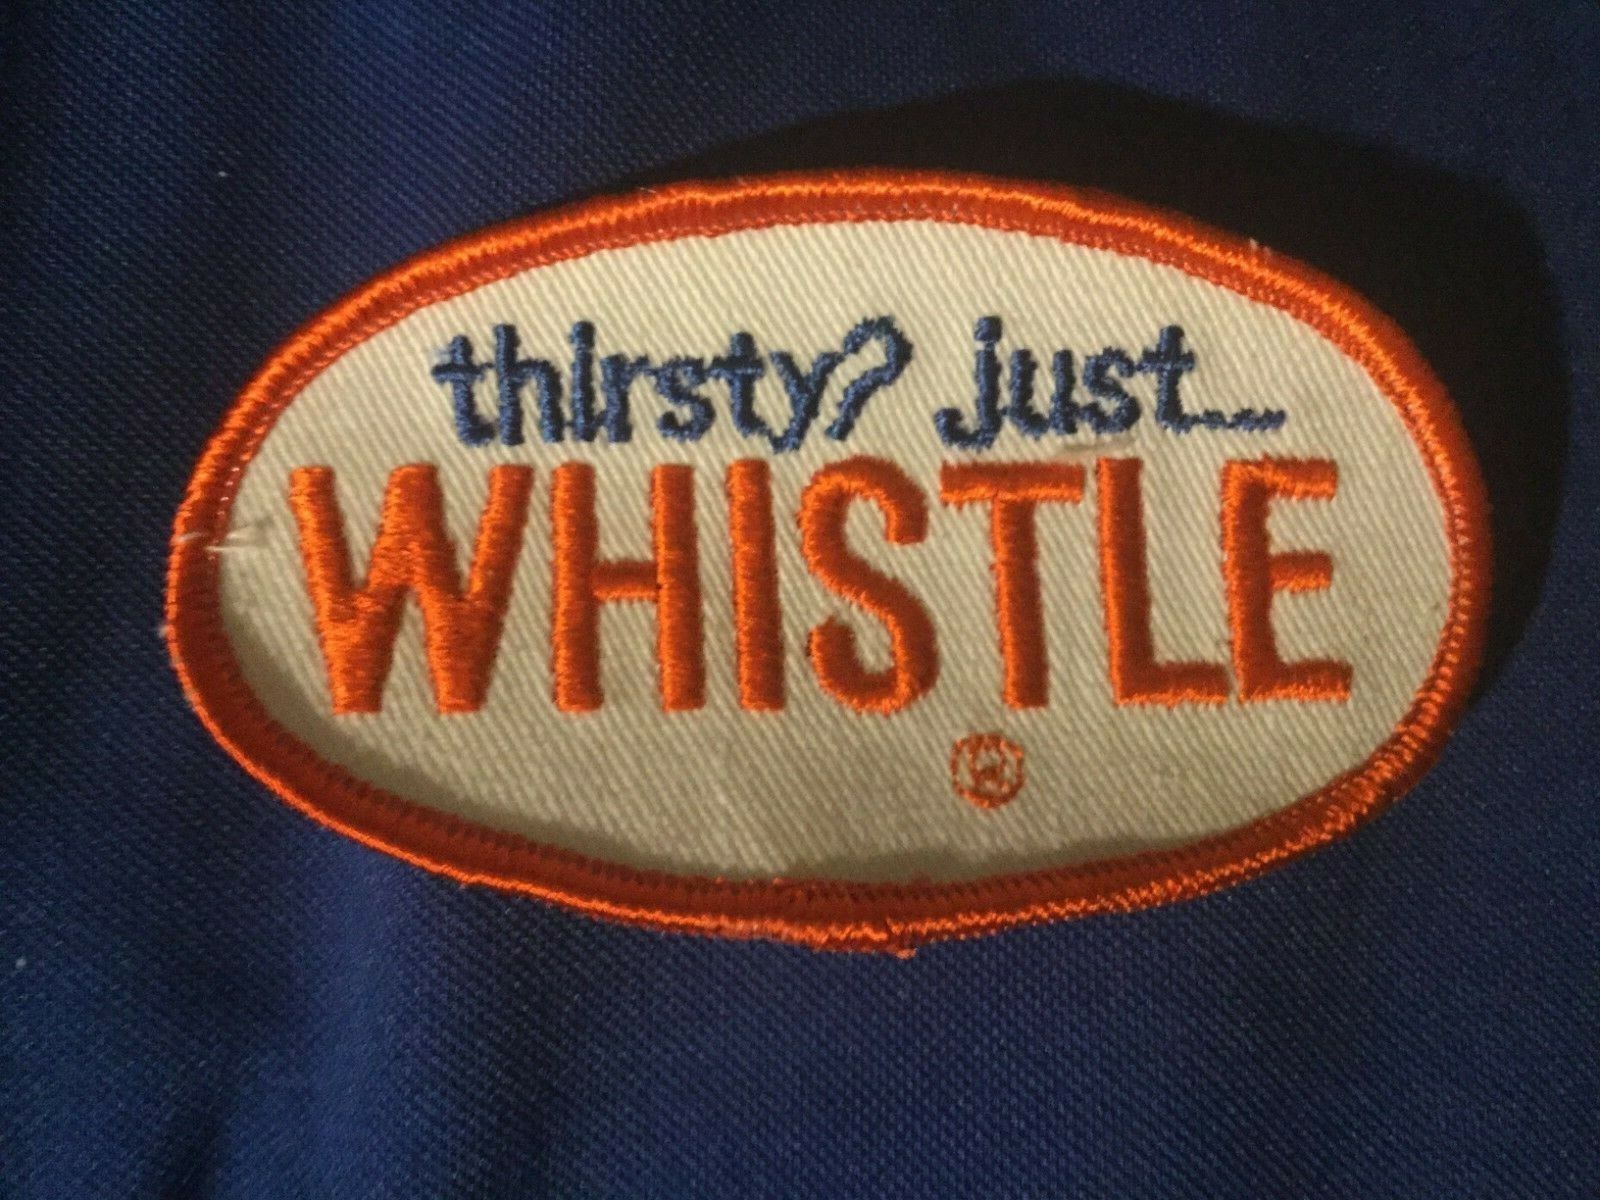 Vess Whistle Orange Uniform Patch New Old Stock